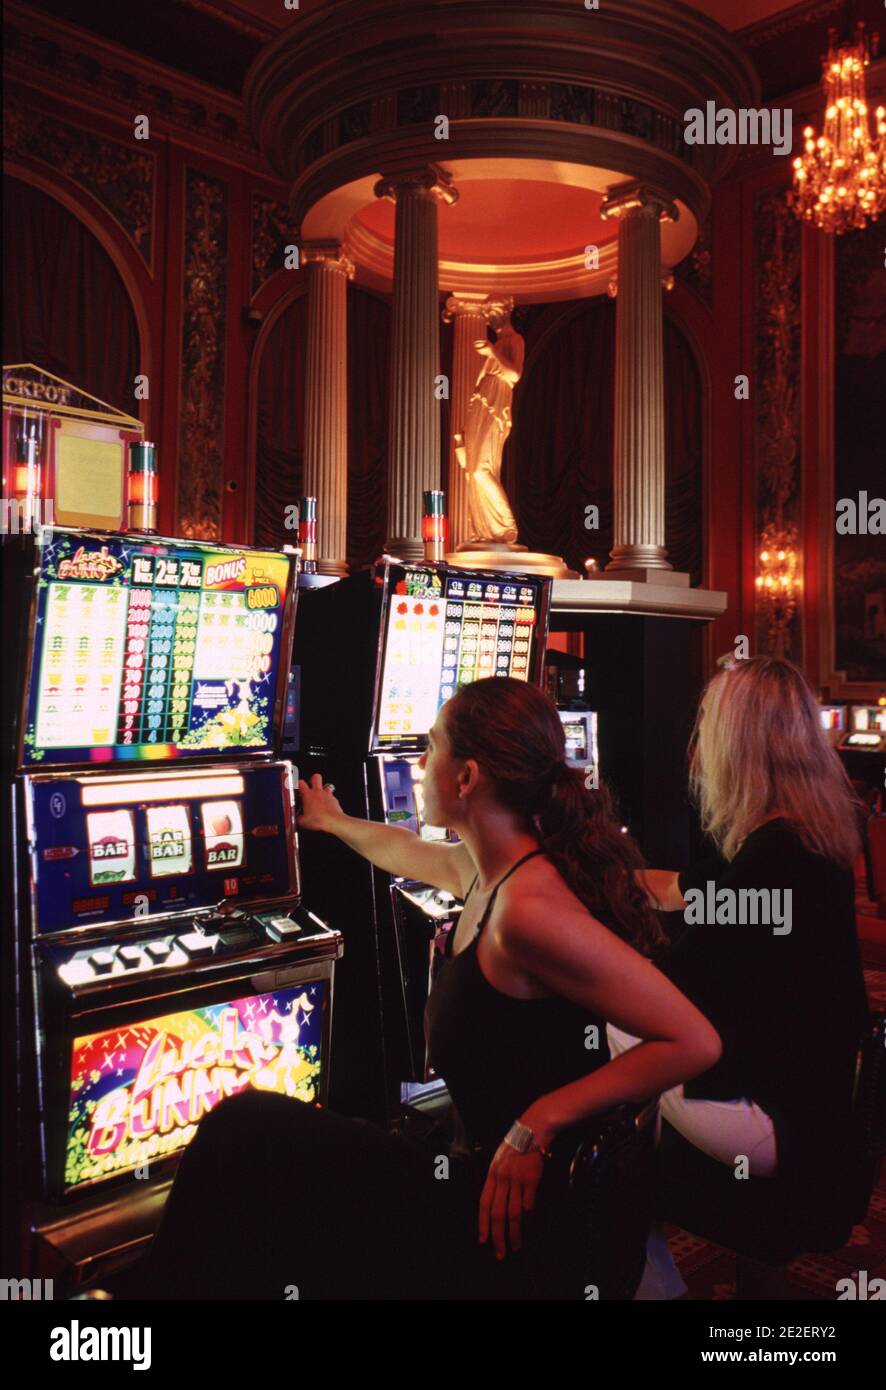 Slot machines in casino, Deauville, Basse-Normandie, France, 2011.Machines à sous, casino, Deauville, Basse-Normandie, France, 2011. Photo by David Lefranc/ABACAPRESS.COM Stock Photo